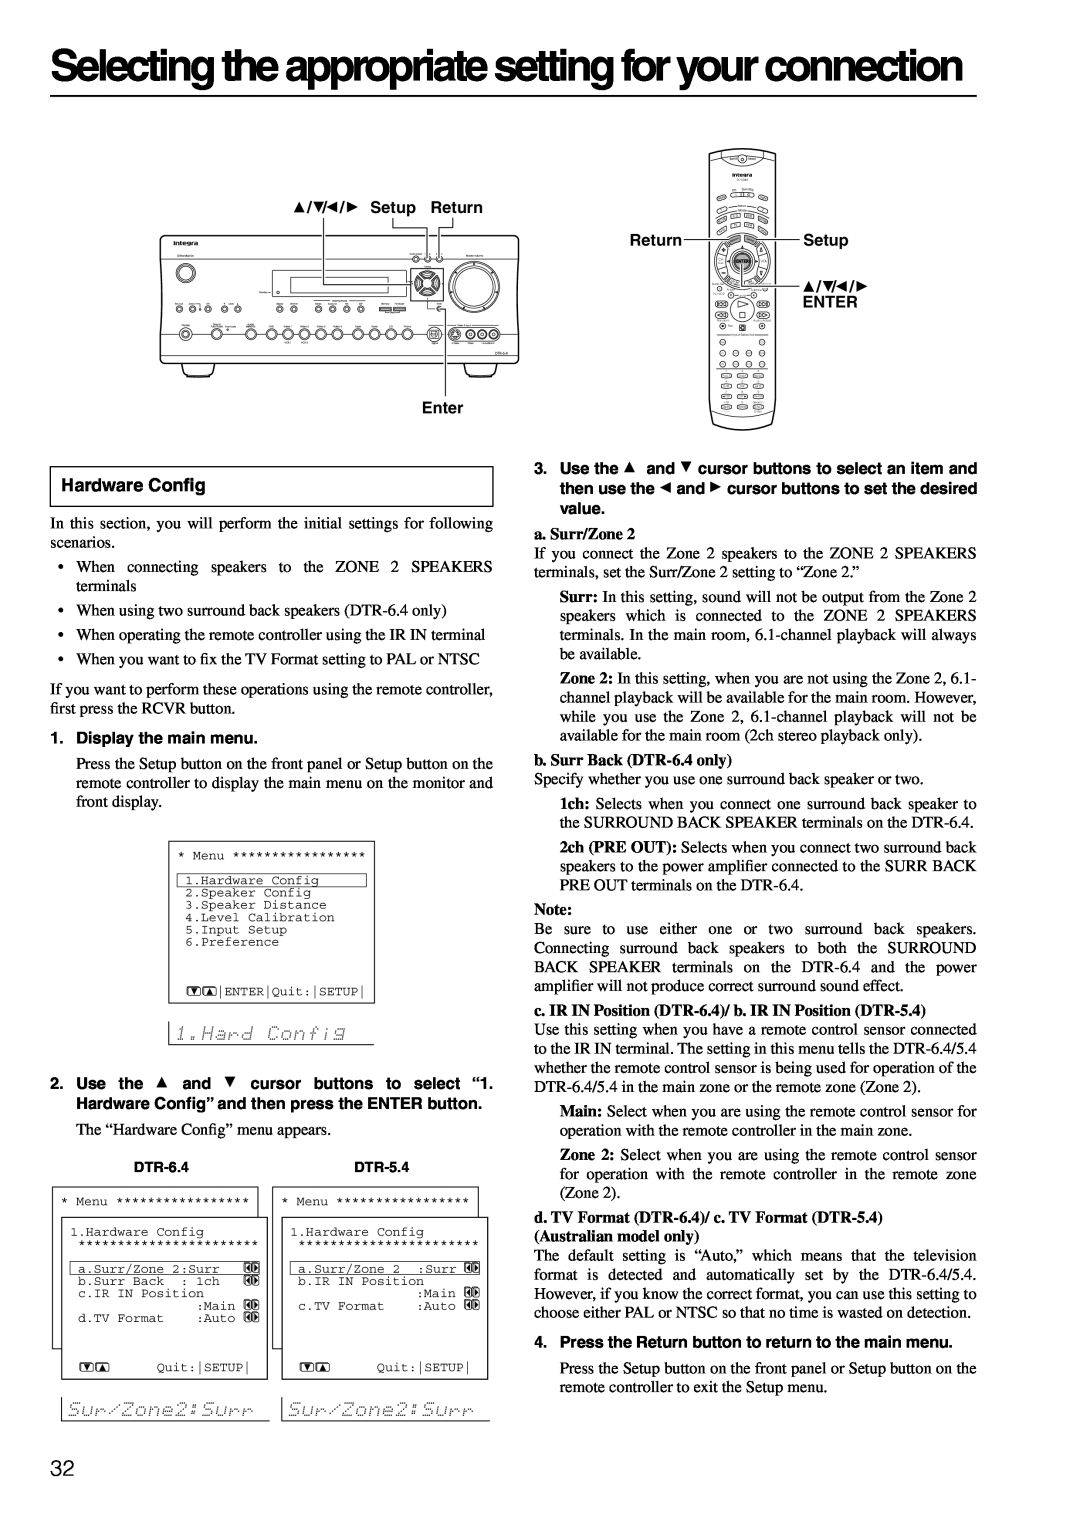 Integra DTR-6.4/5.4 instruction manual Hardware Conﬁg, a. Surr/Zone, b. Surr Back DTR-6.4only 